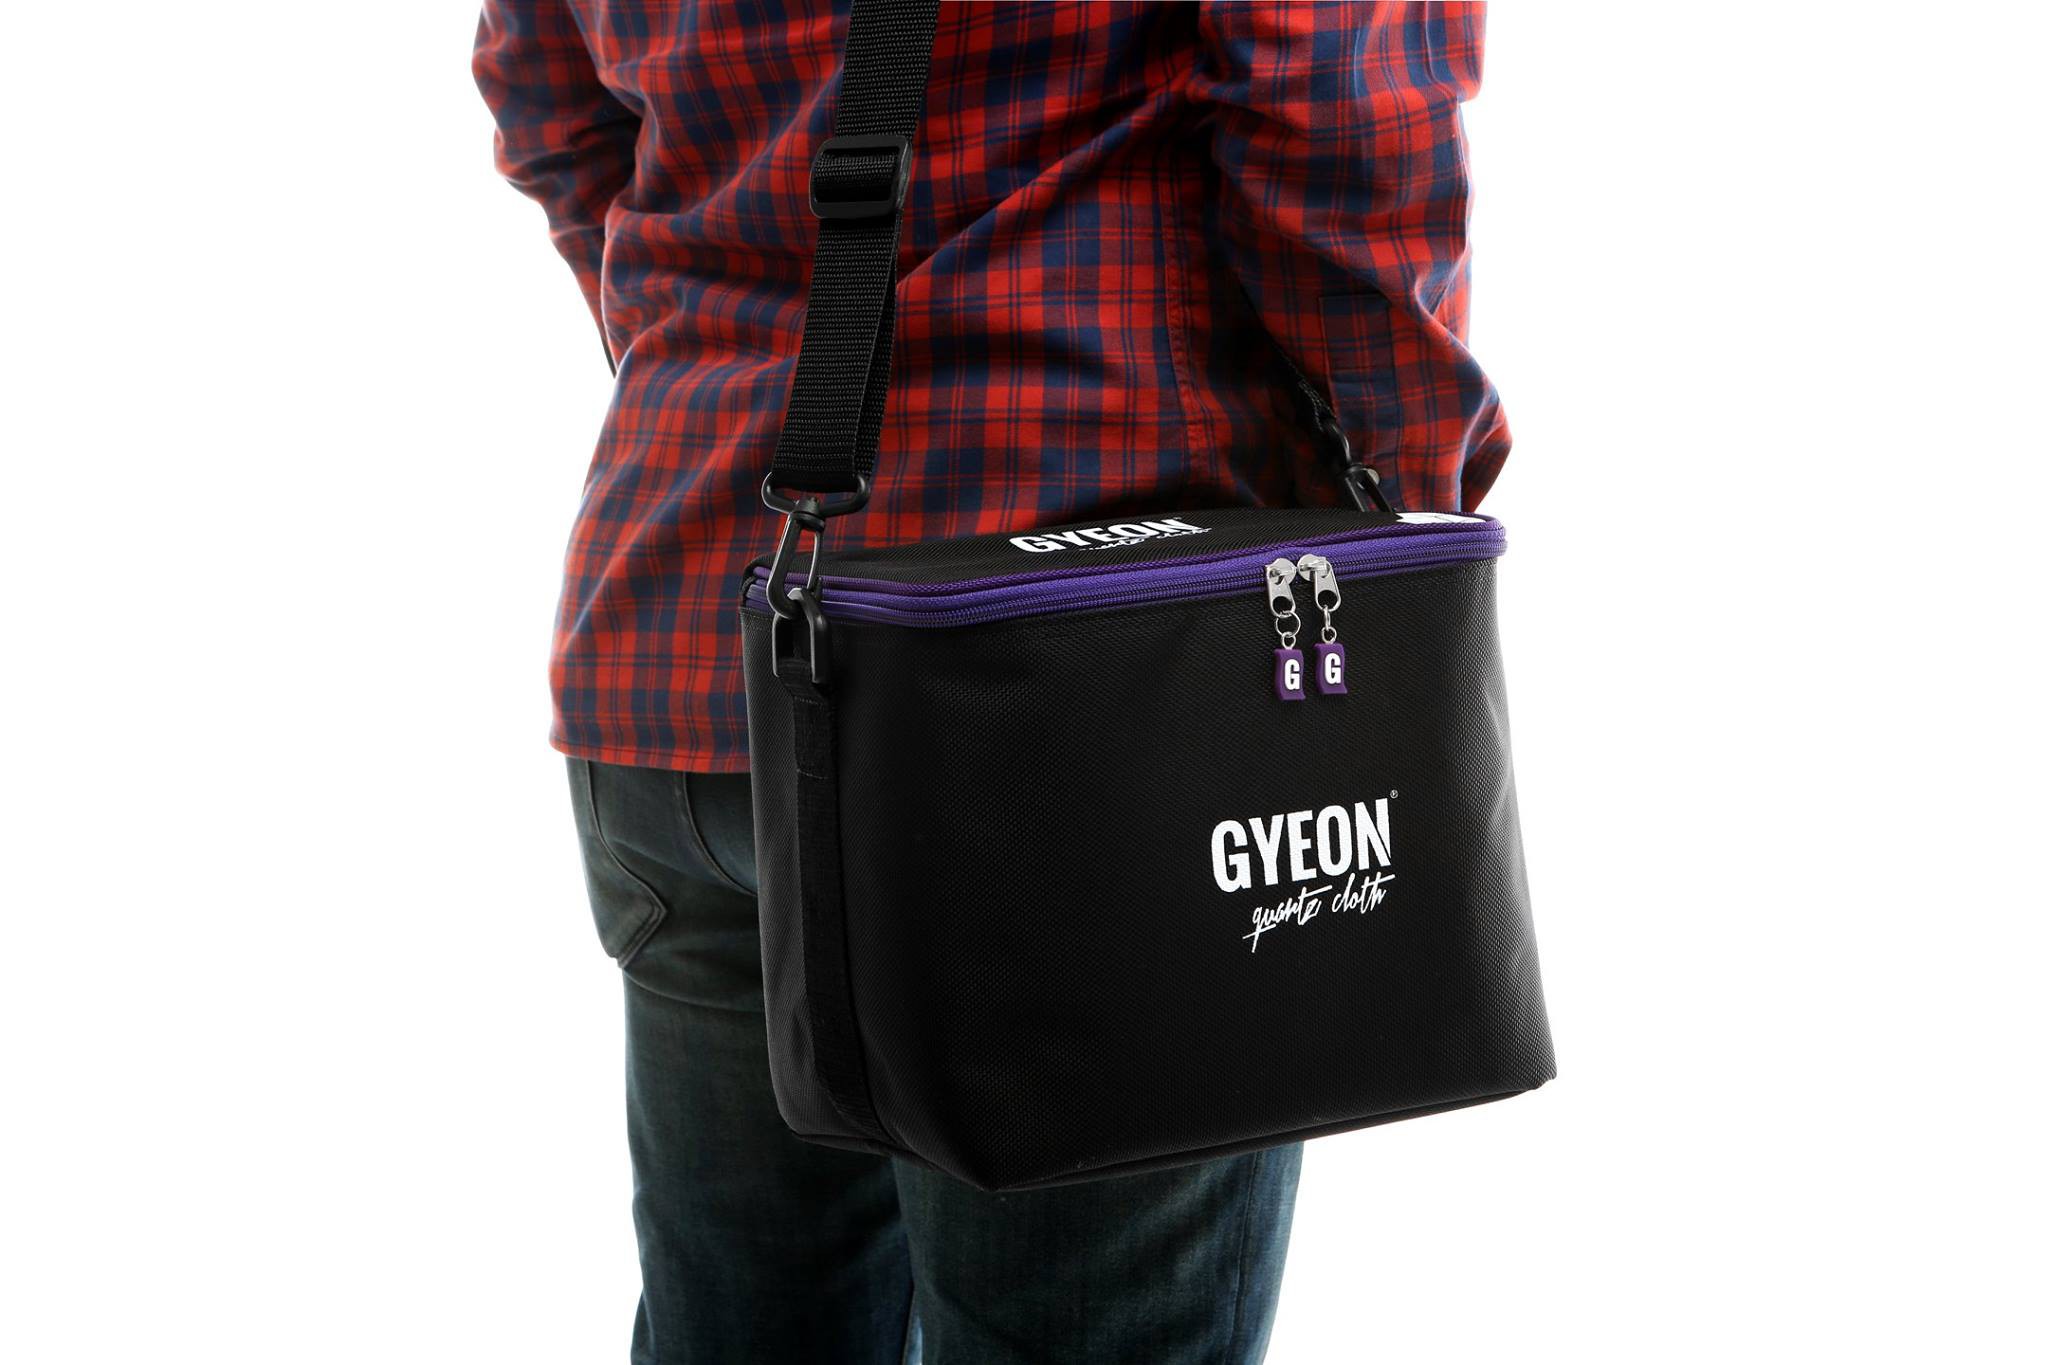 Сумка detail. Gyeon q2m detail Bag small. Detail Bag small сумка для выездного детейлинга. Gyeon detail Bag small. Сумка для детейлинга купить недорого.